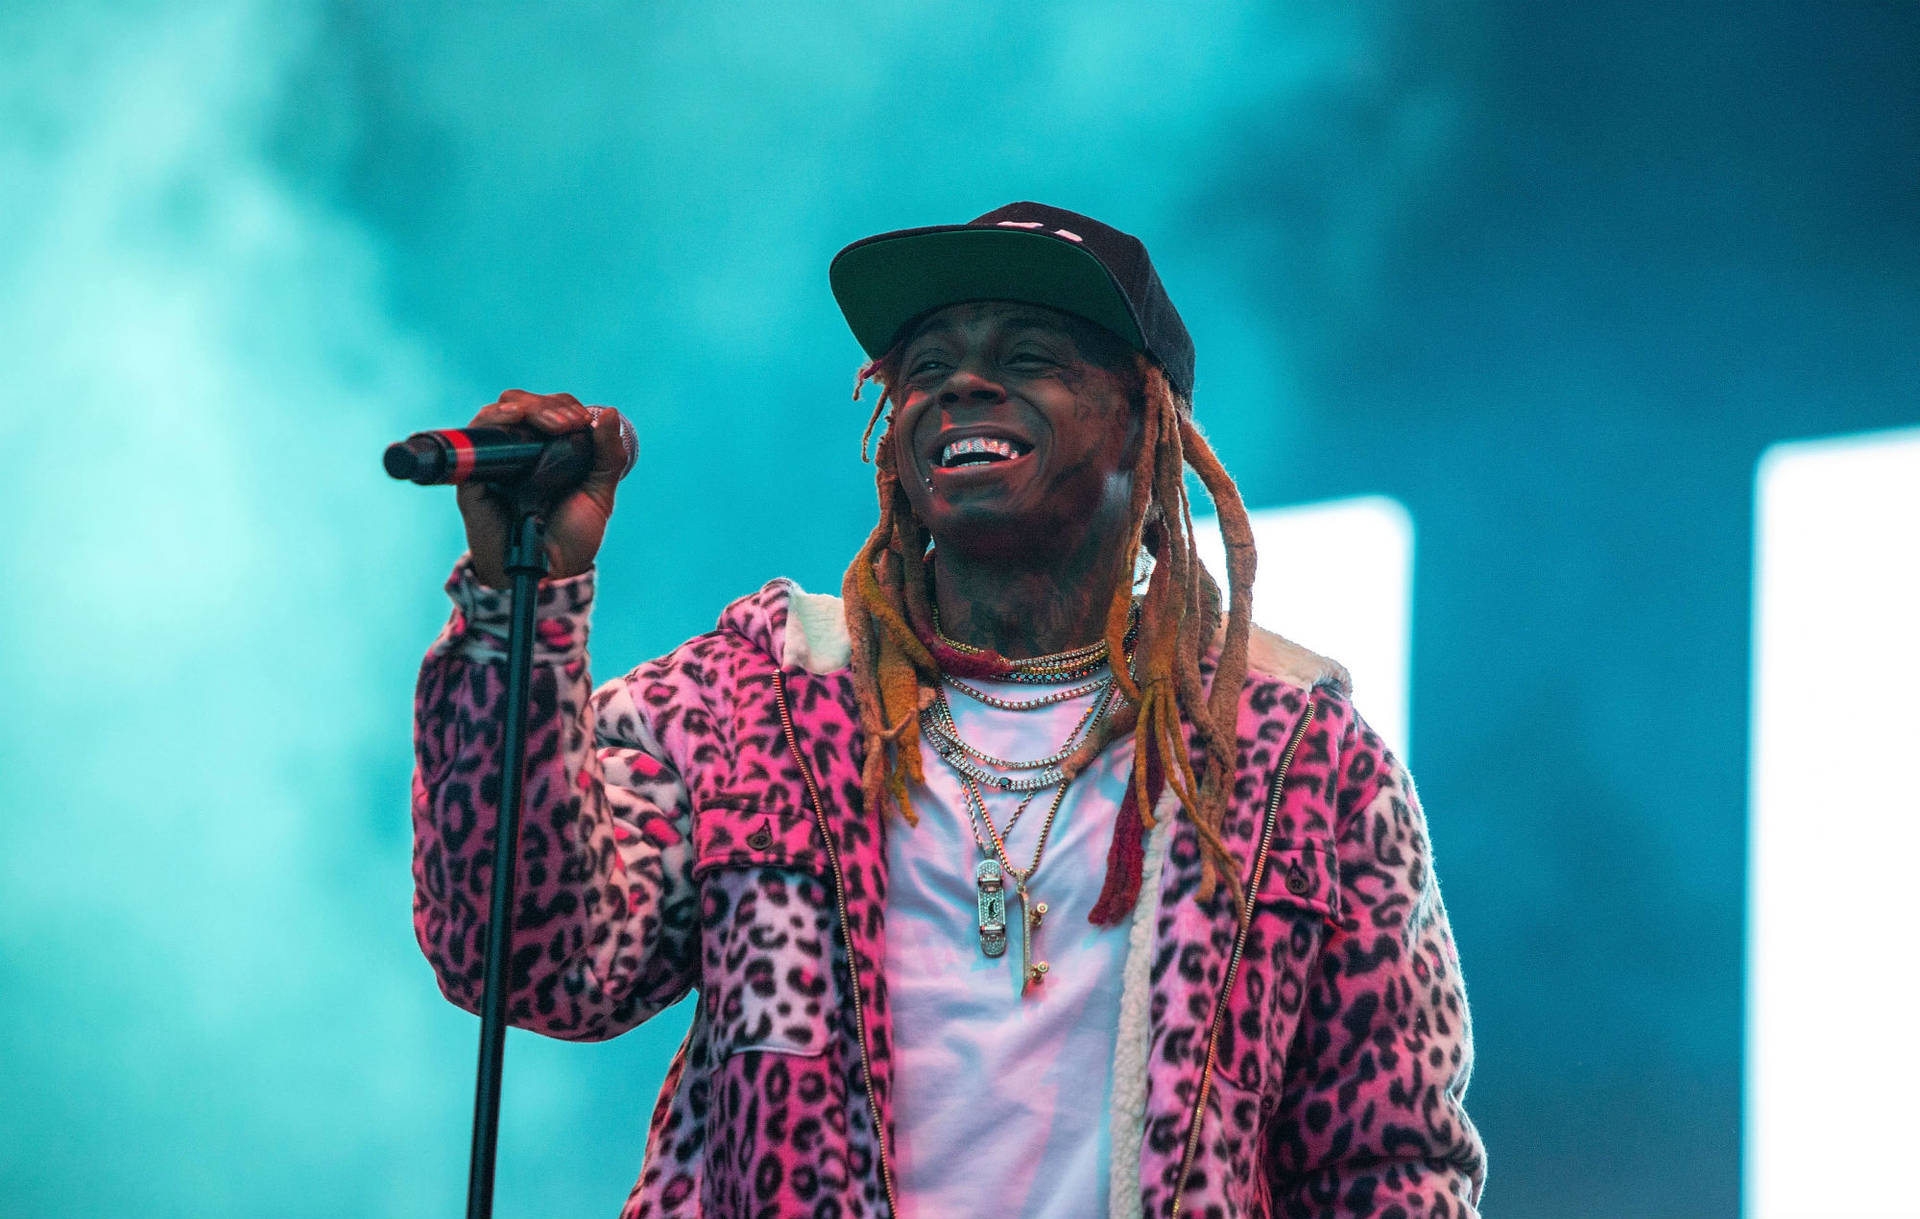 Lil Wayne Leopard Print Jacket Background